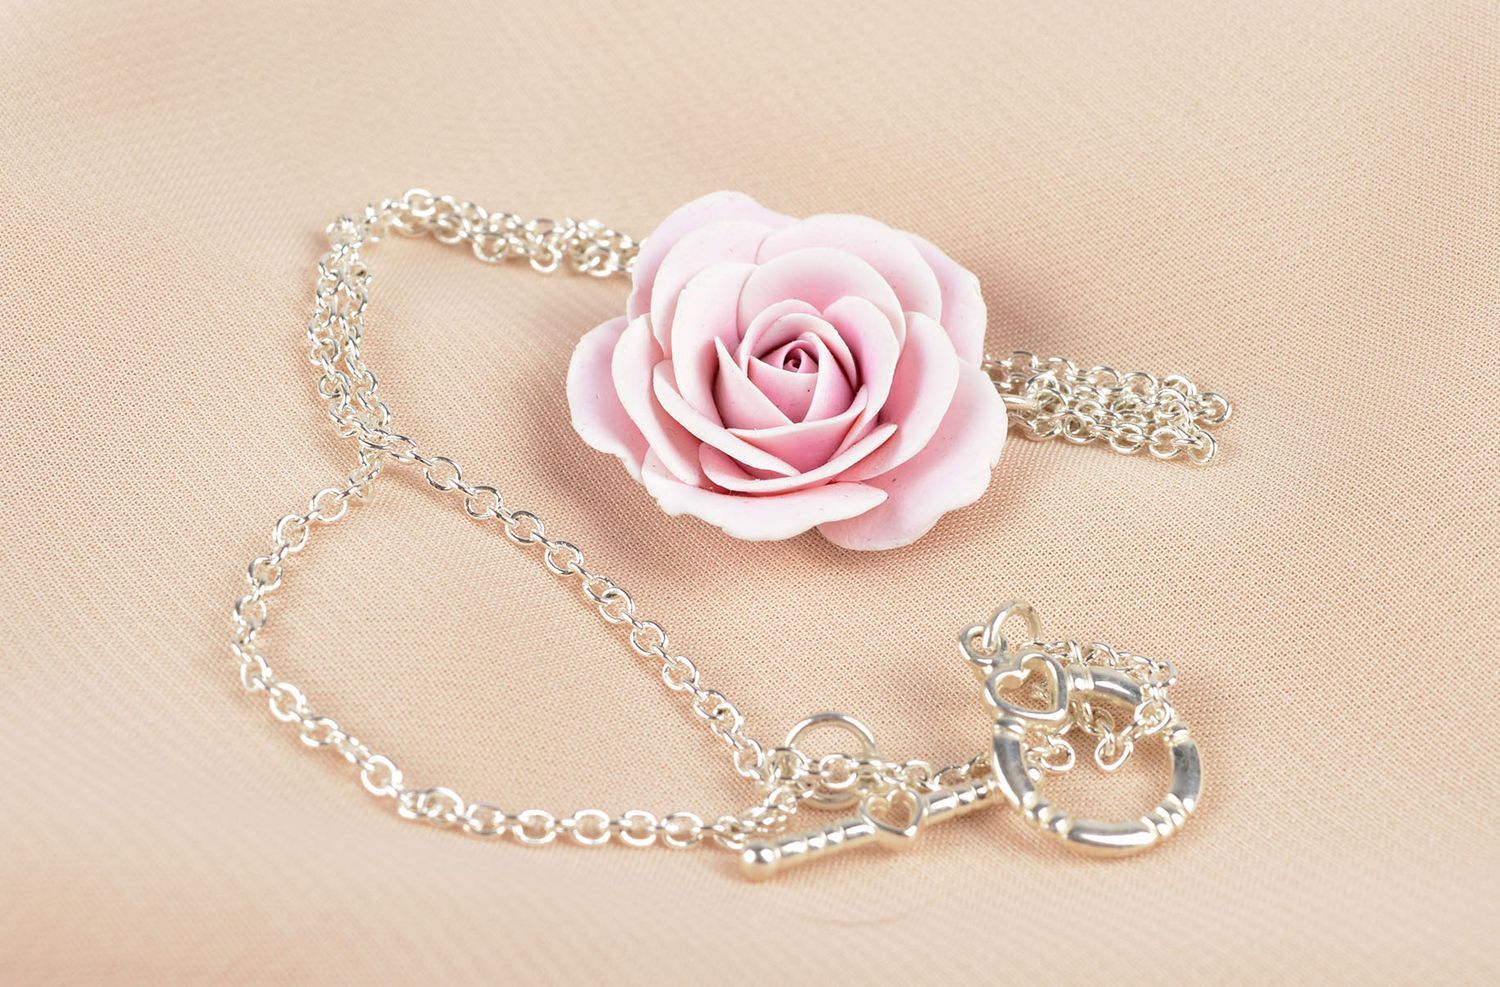 Handmade pendant for women unusual accessory gift ideas designer jewelry photo 5